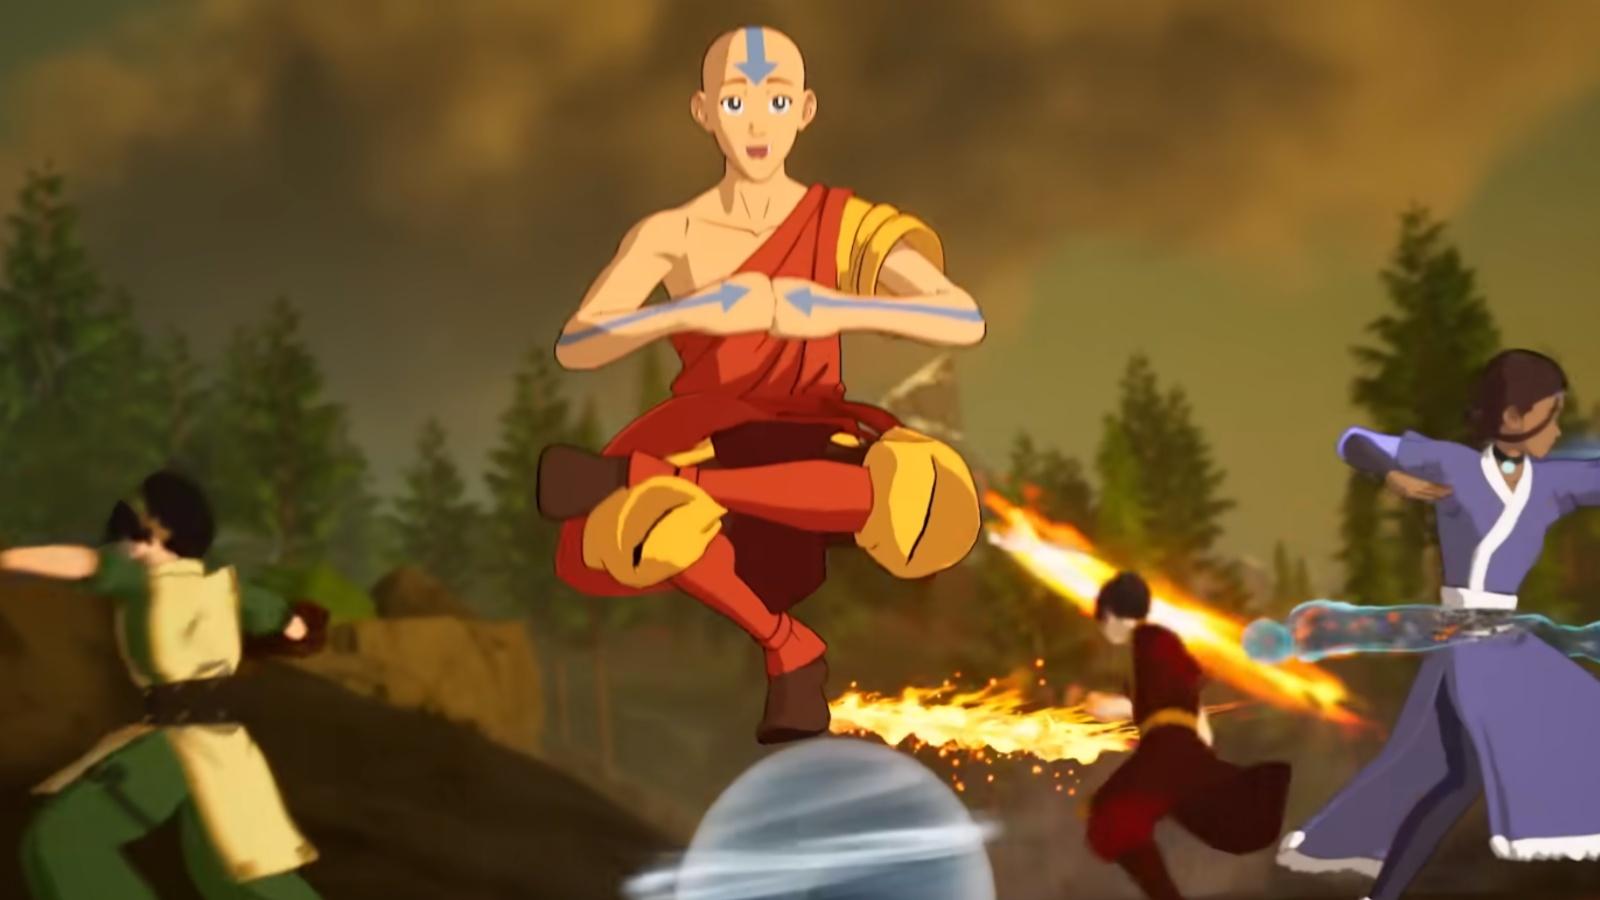 A screenshot featuring Aang airbending in Fortnite.